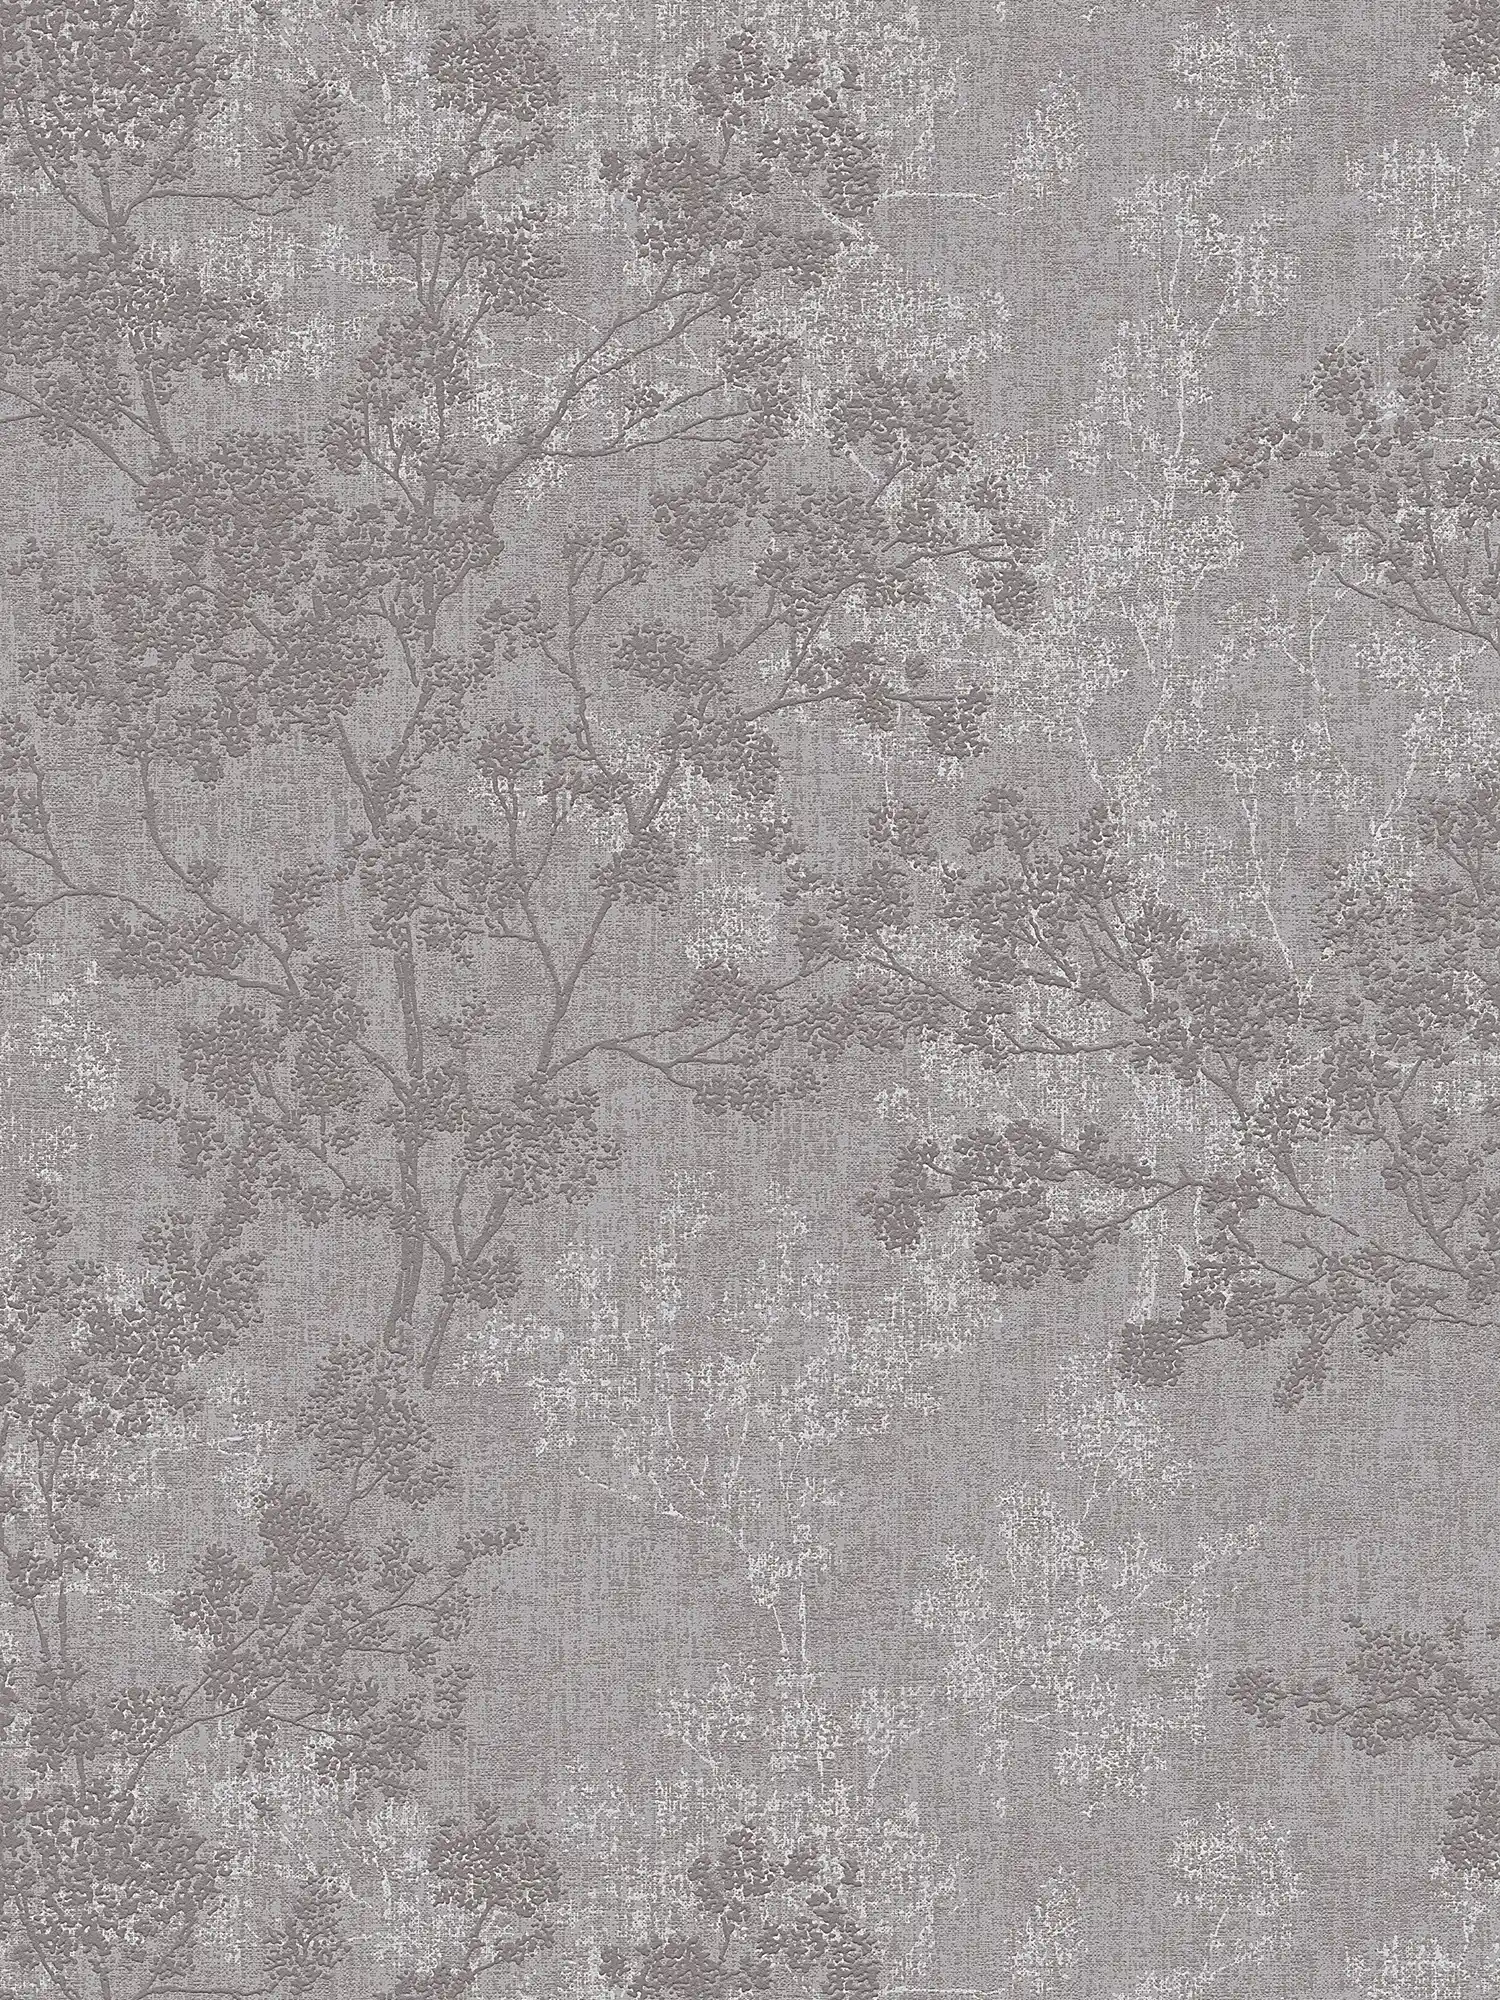 wallpaper leaves pattern in linen look - grey, brown
